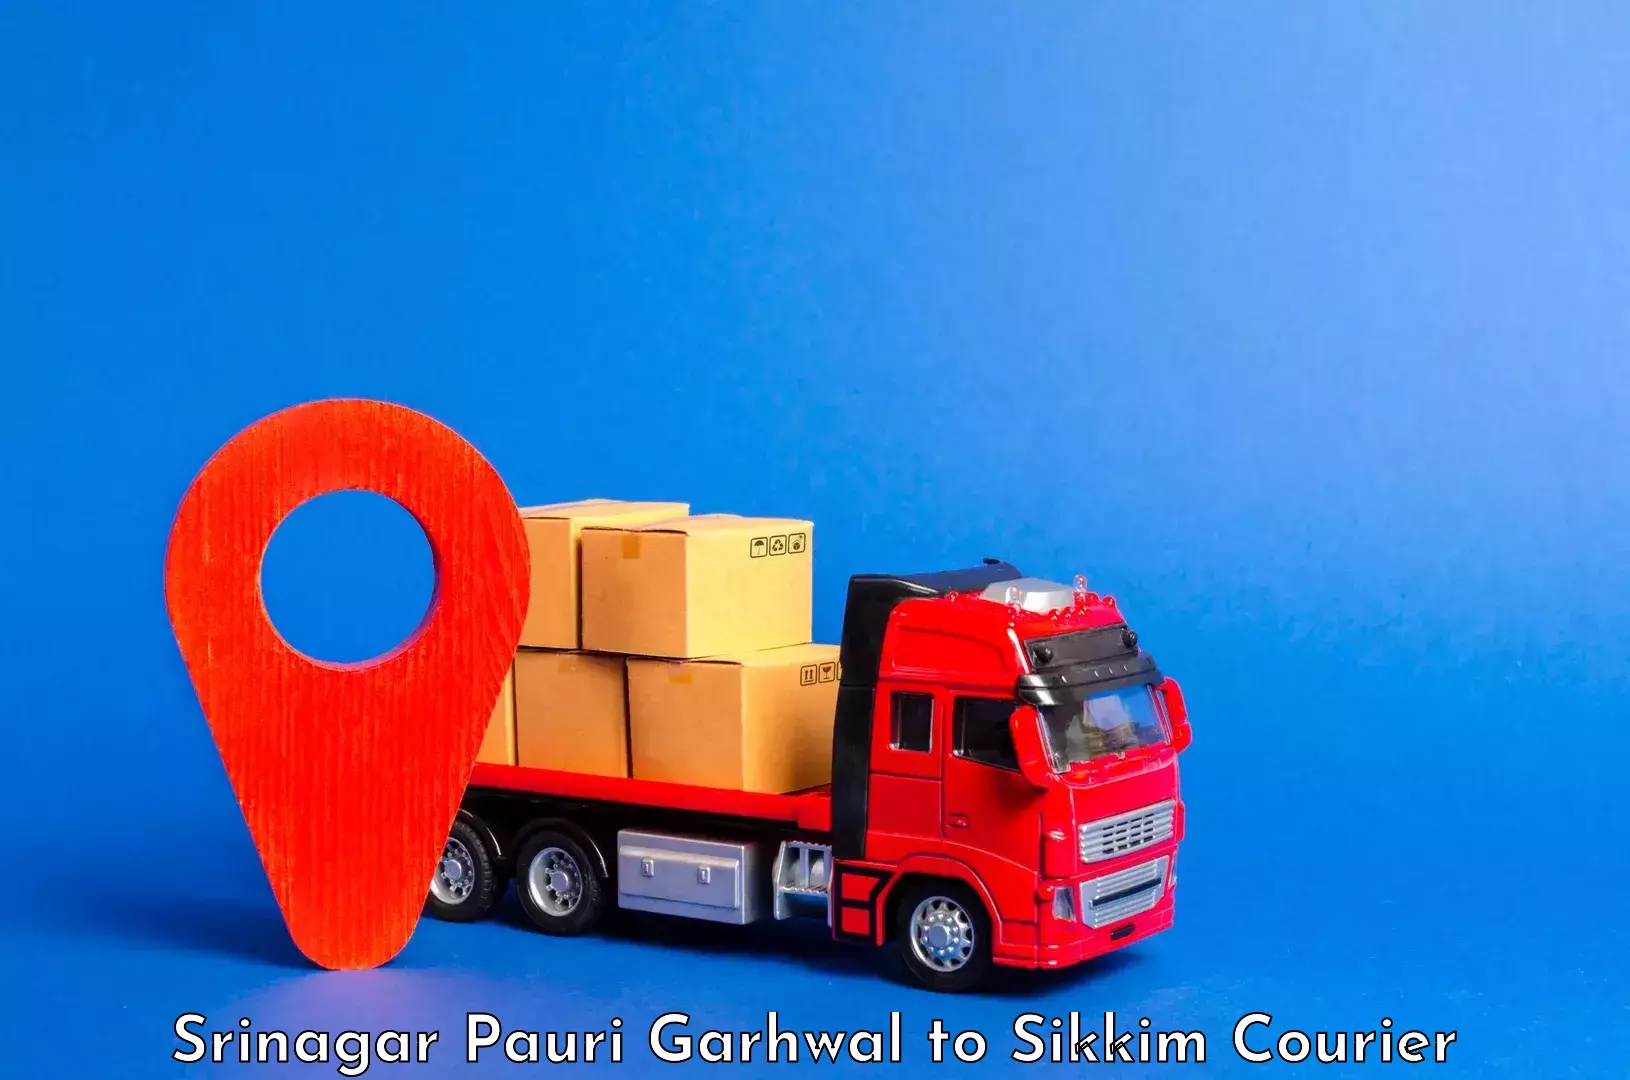 Door-to-door baggage service Srinagar Pauri Garhwal to Gangtok